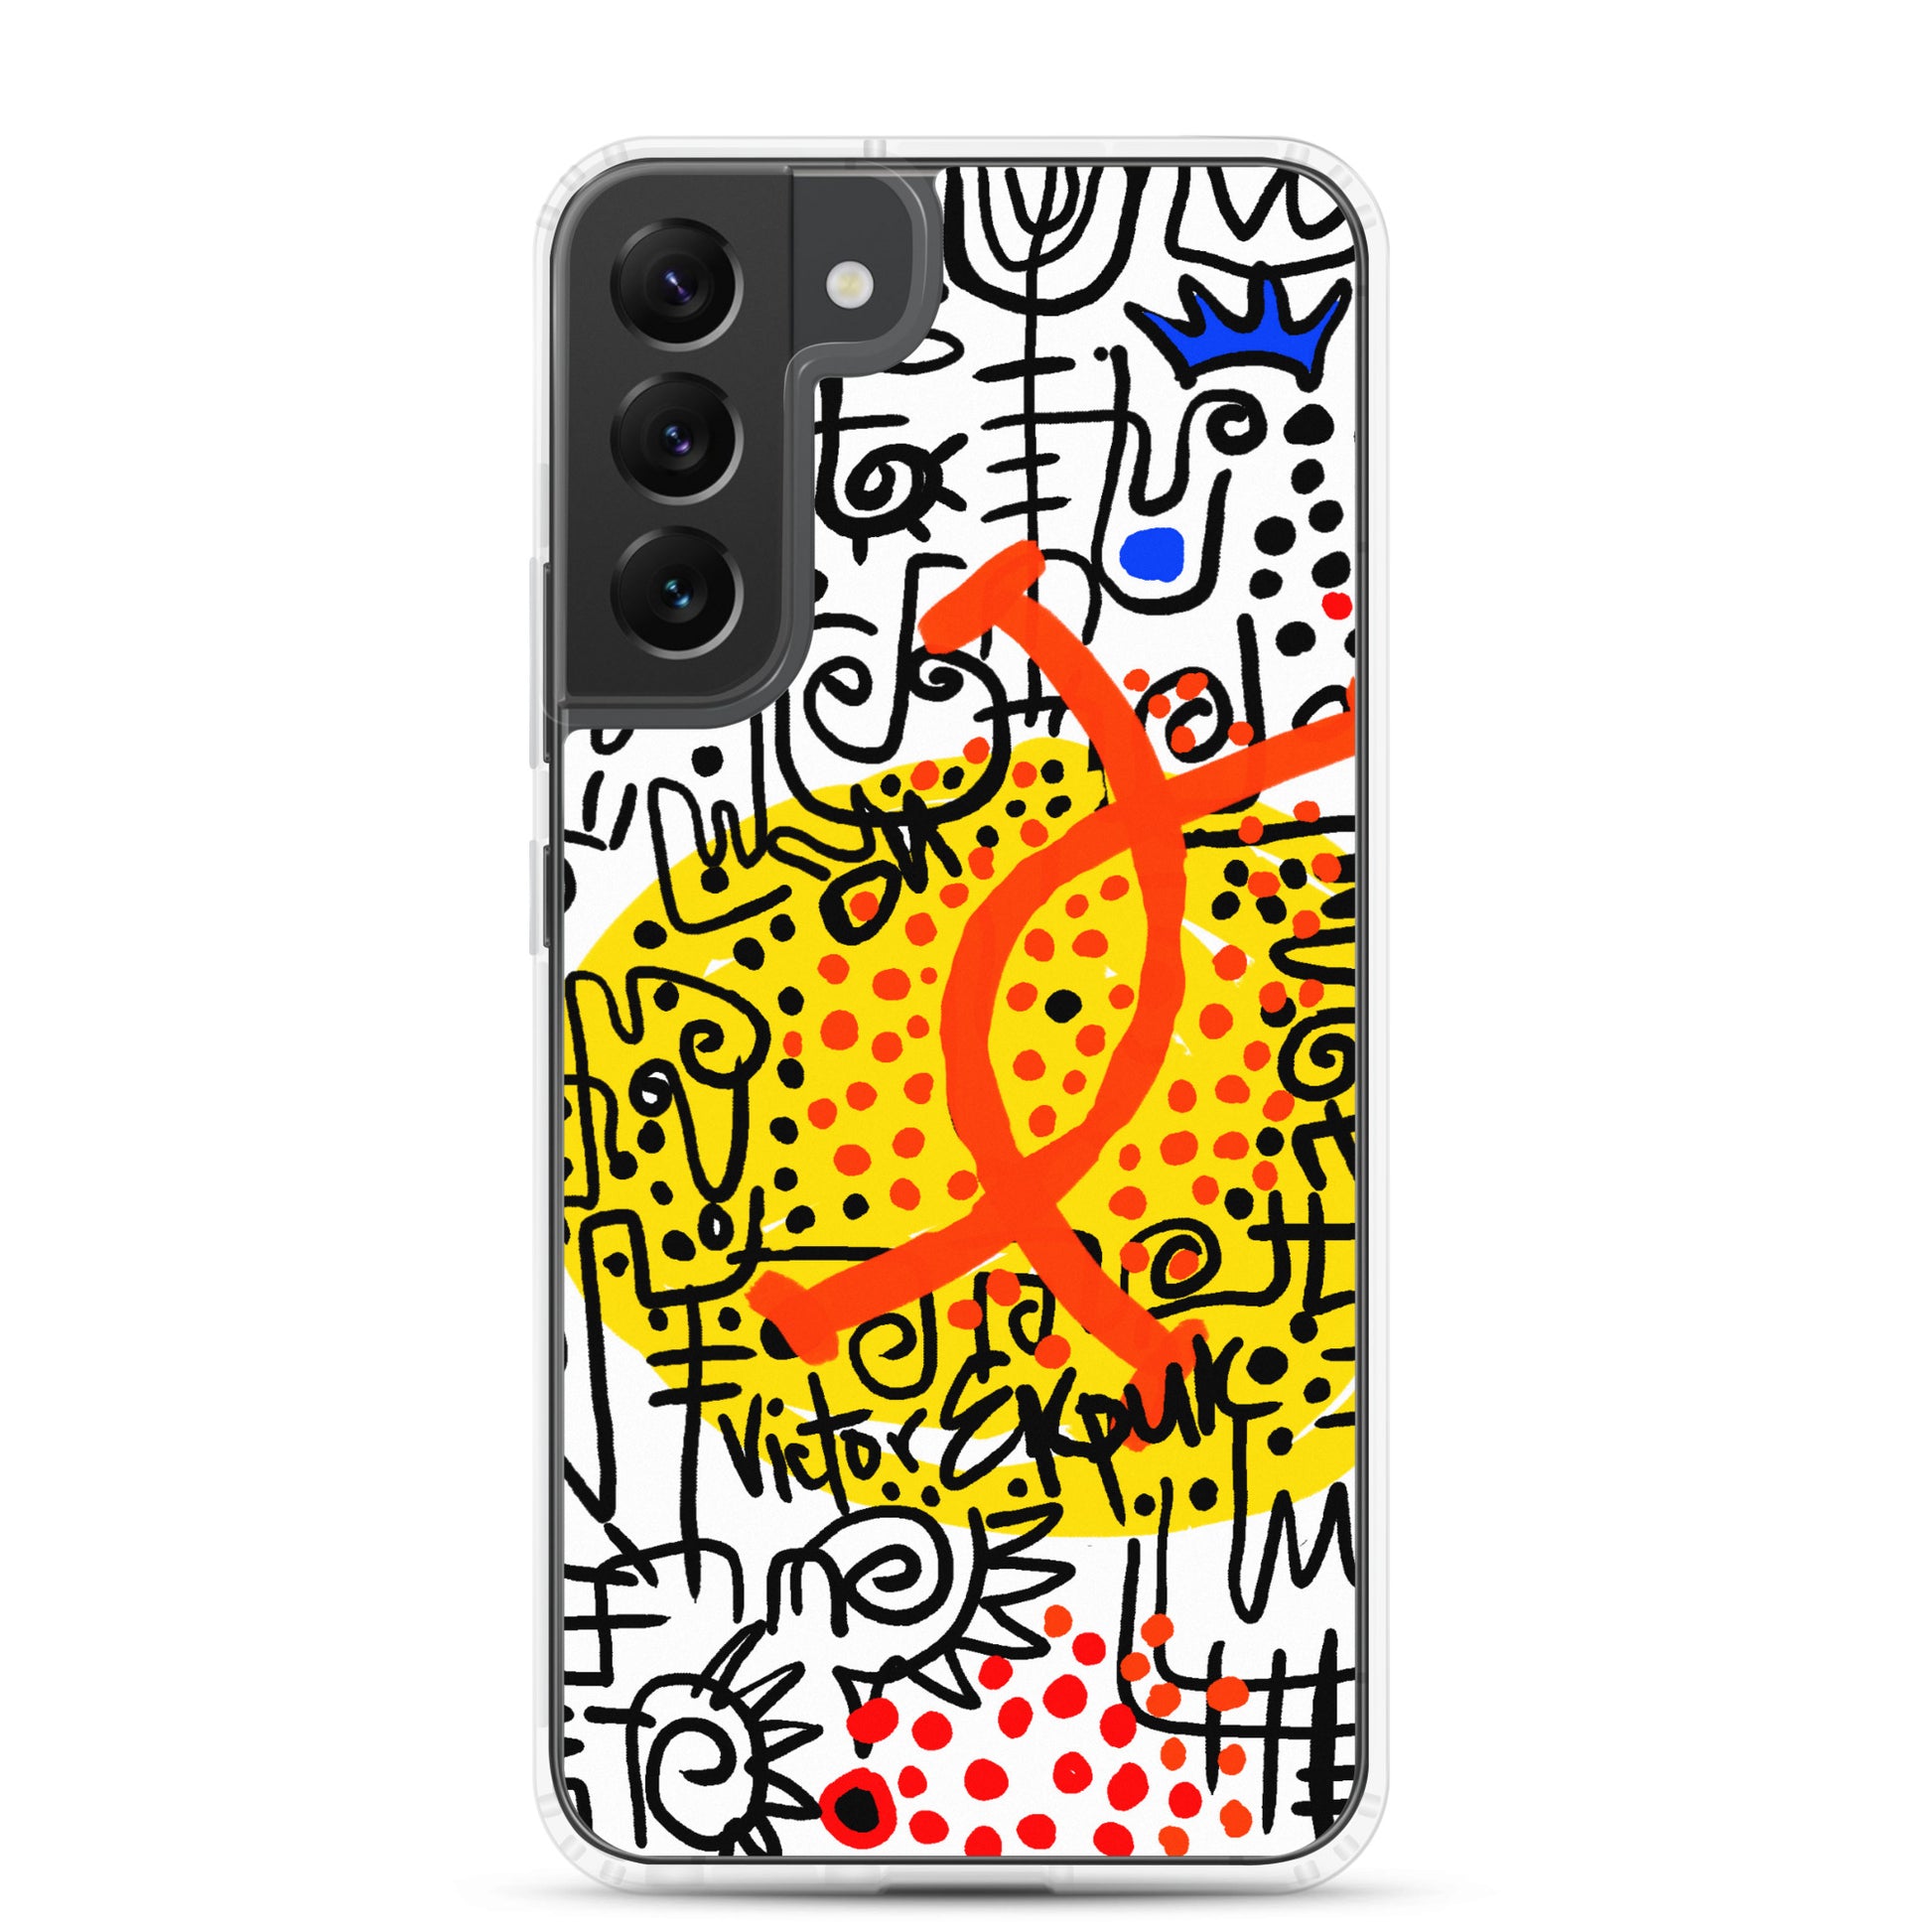 LOUIS VUITTON ICON COLORFUL Samsung Galaxy S22 Ultra Case Cover